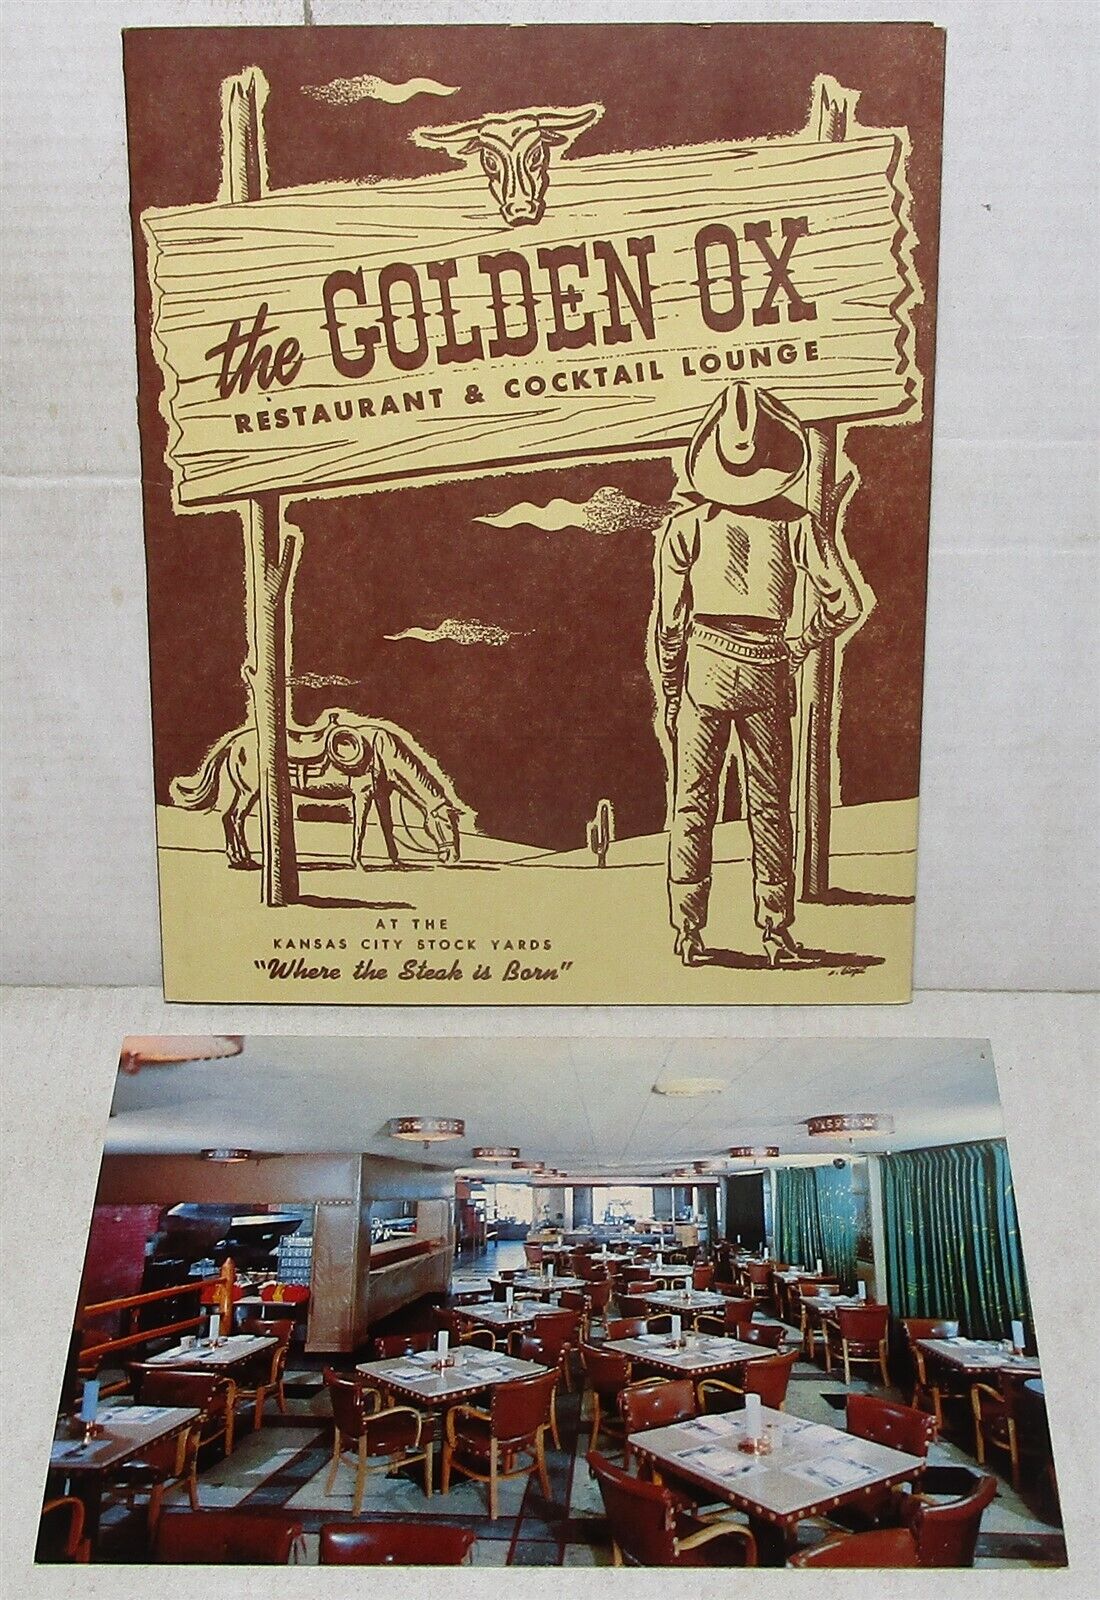 1950s Golden Ox Restaurant, Kansas City stock yards, souvenir menu + postcard